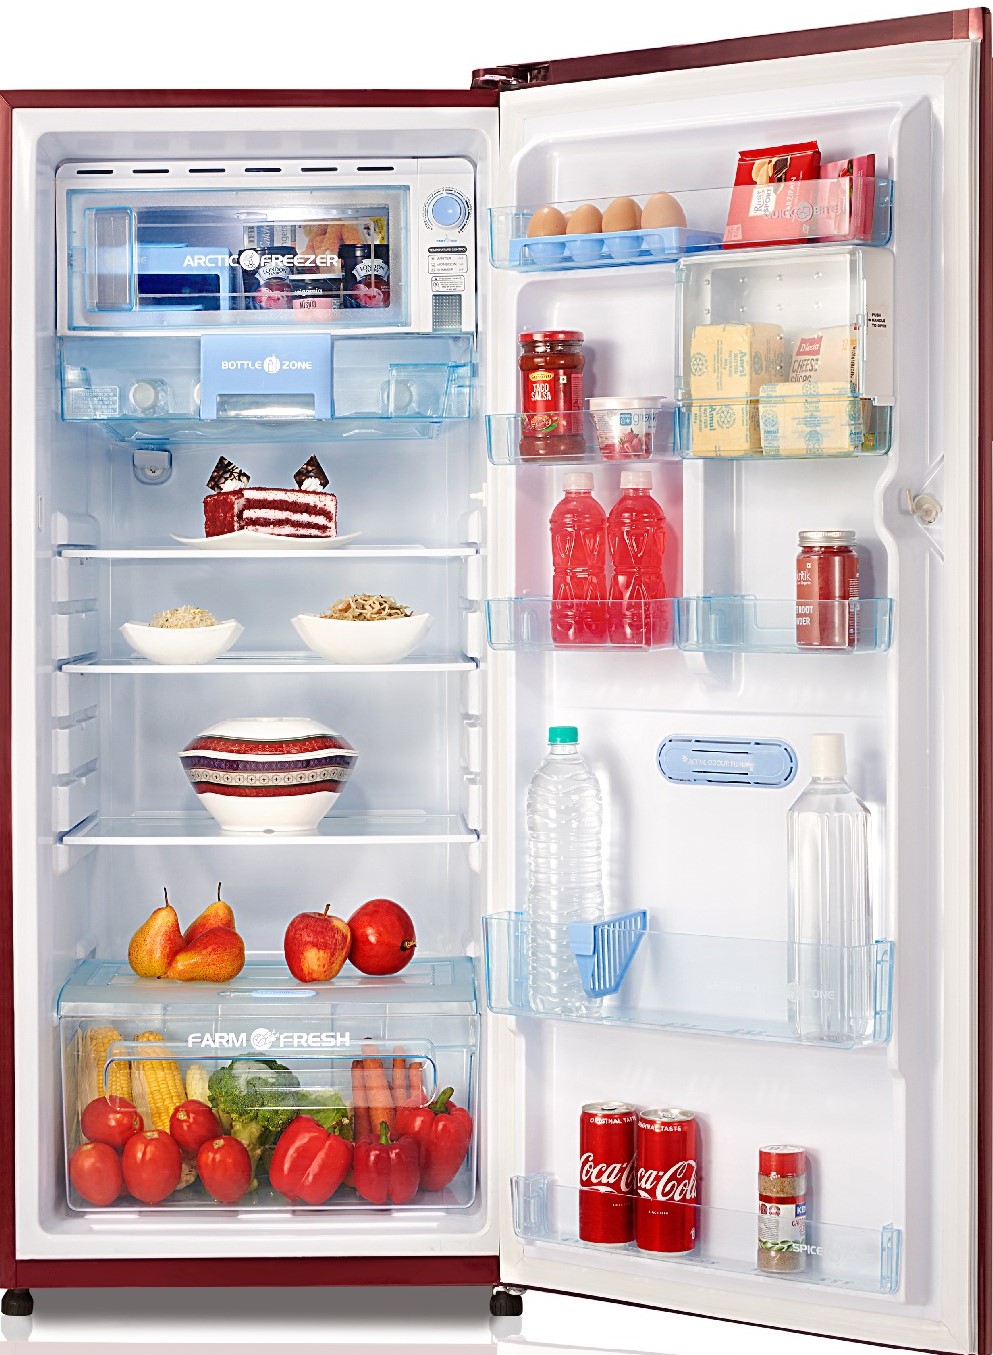 MarQ refrigerators